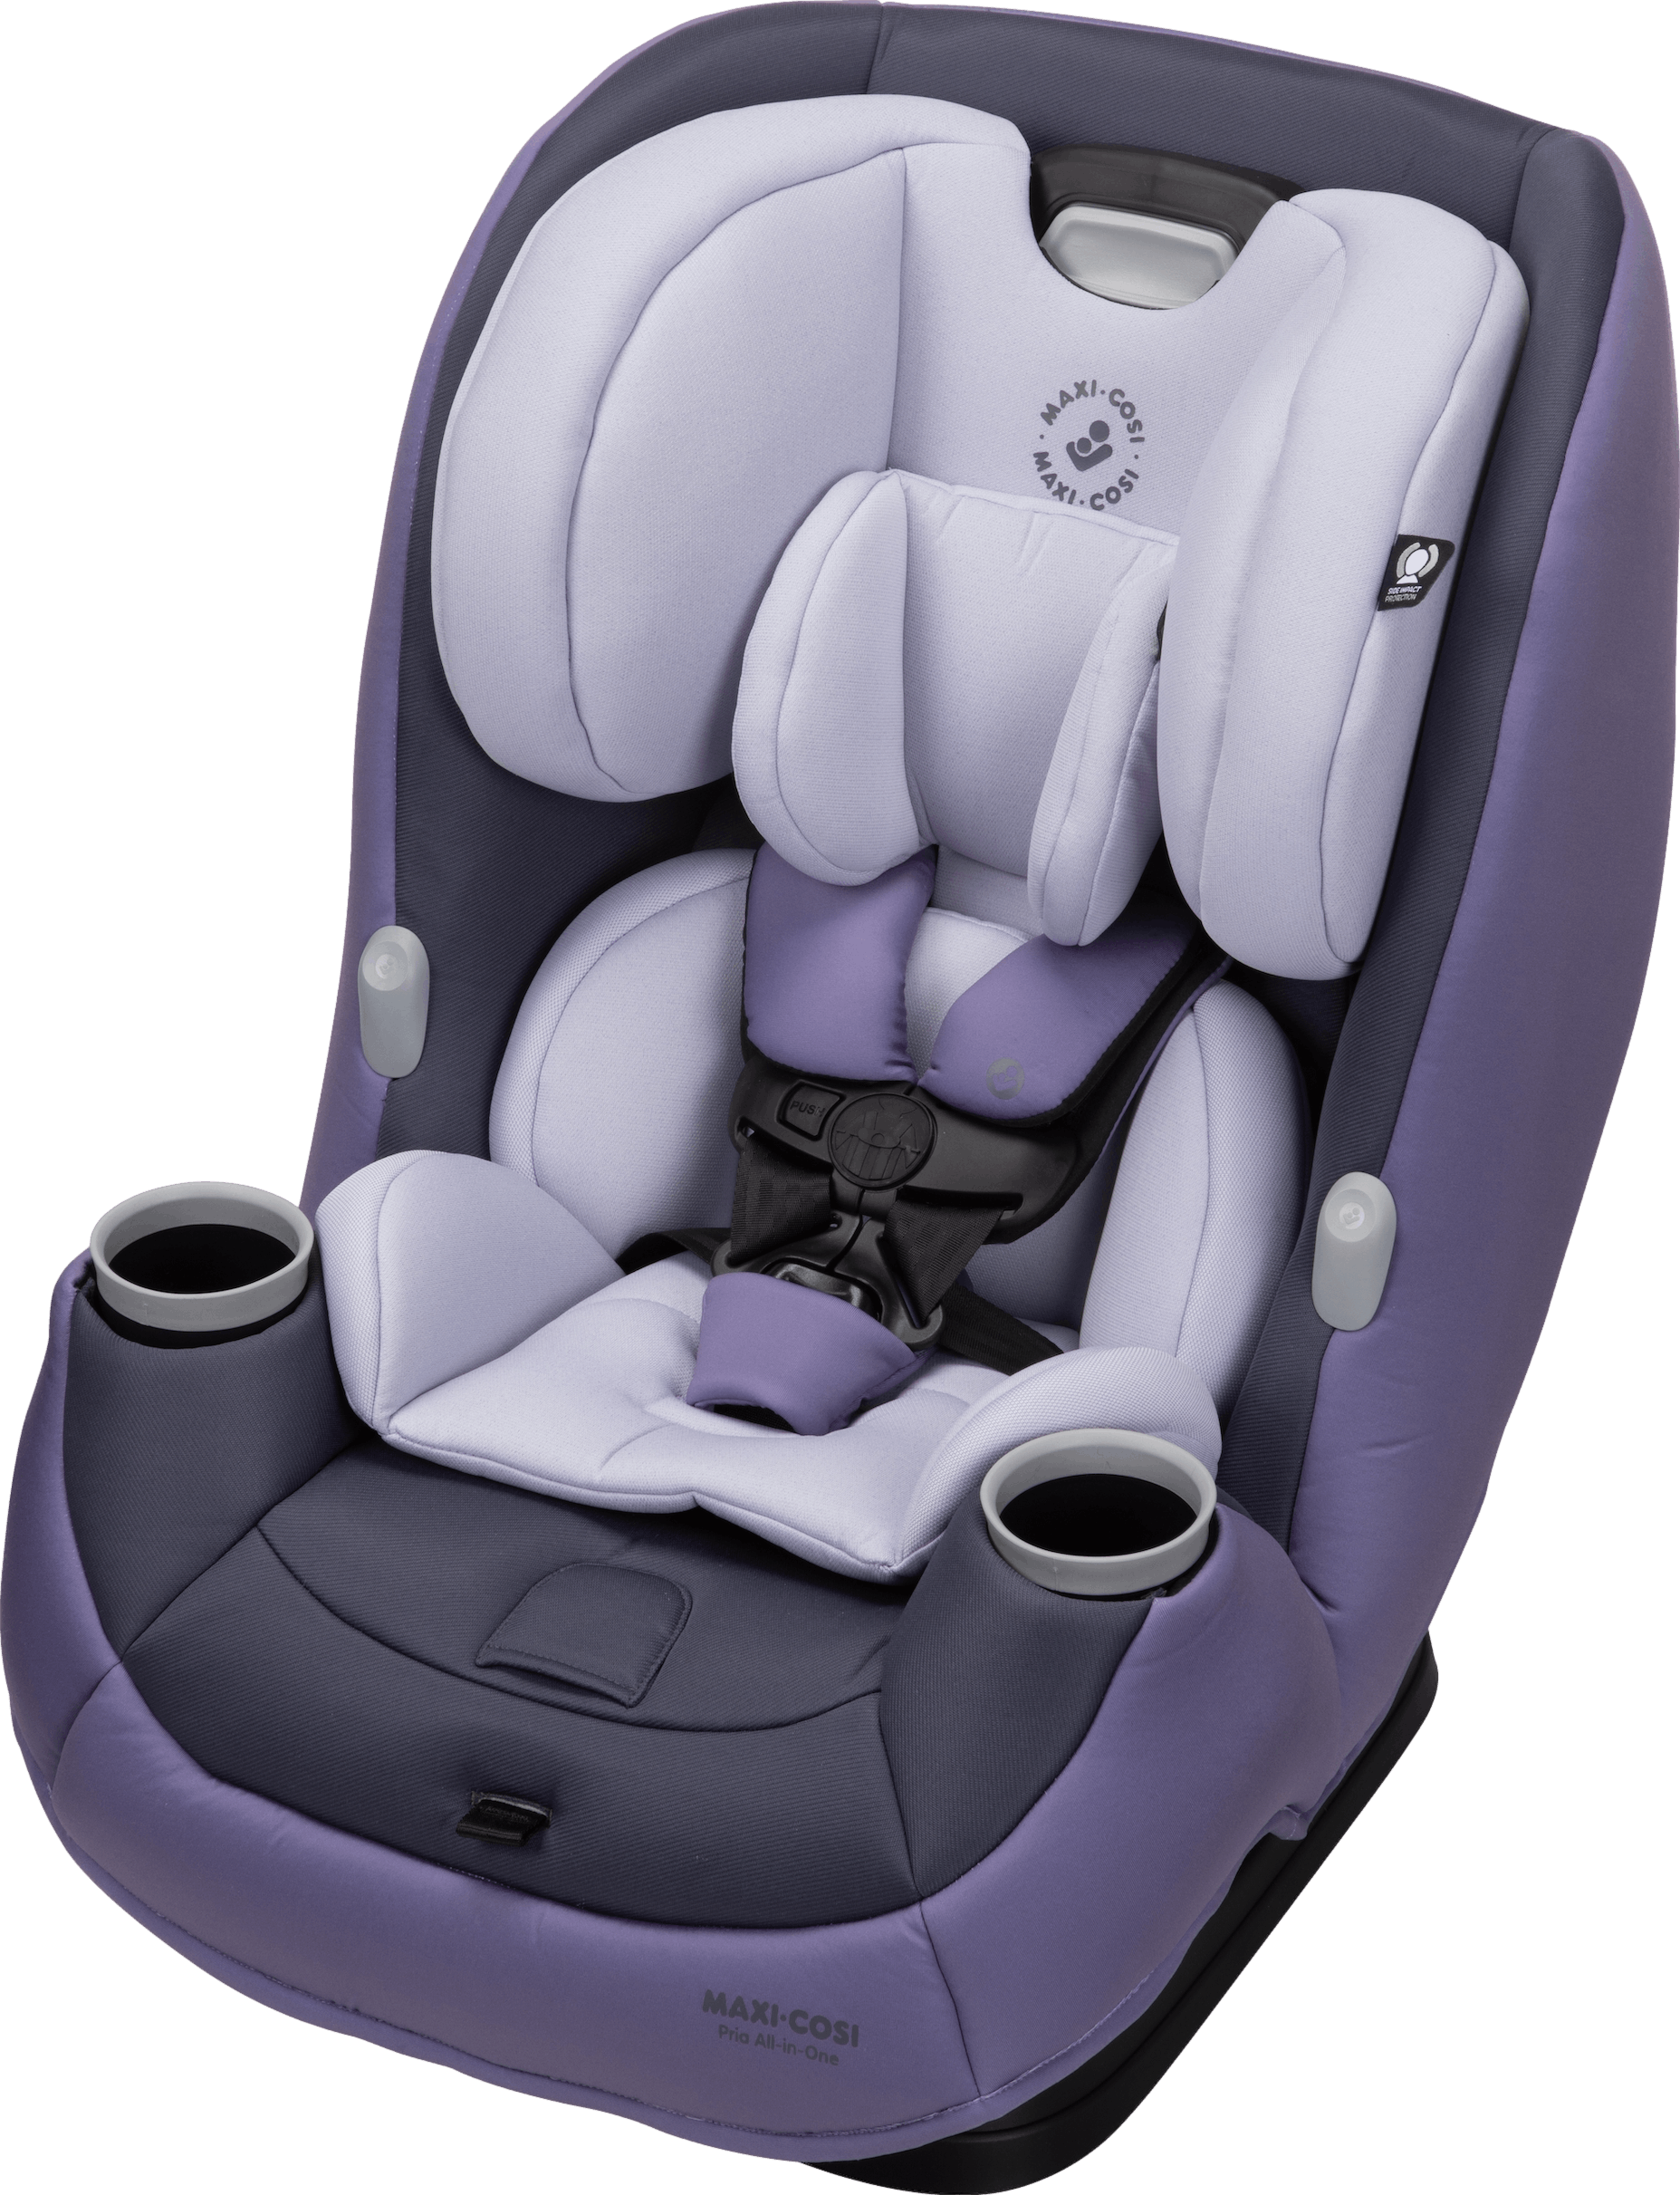 Buy R for Rabbit Baby Car Seats Online